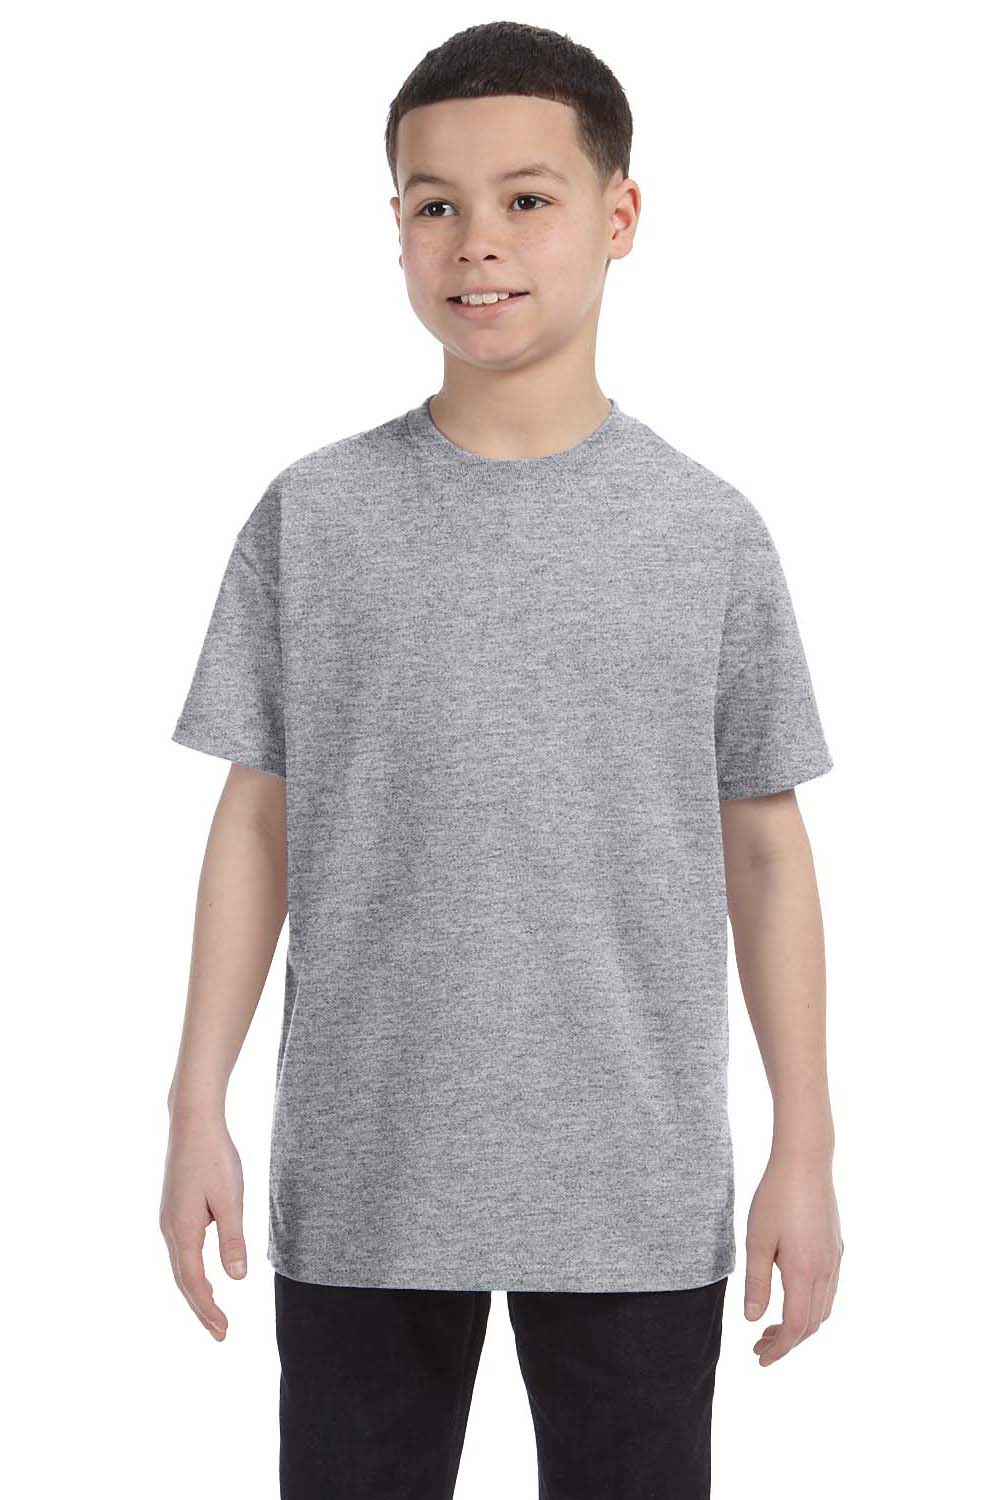 Jerzees 29B Youth Dri-Power Moisture Wicking Short Sleeve Crewneck T-Shirt Oxford Grey Front